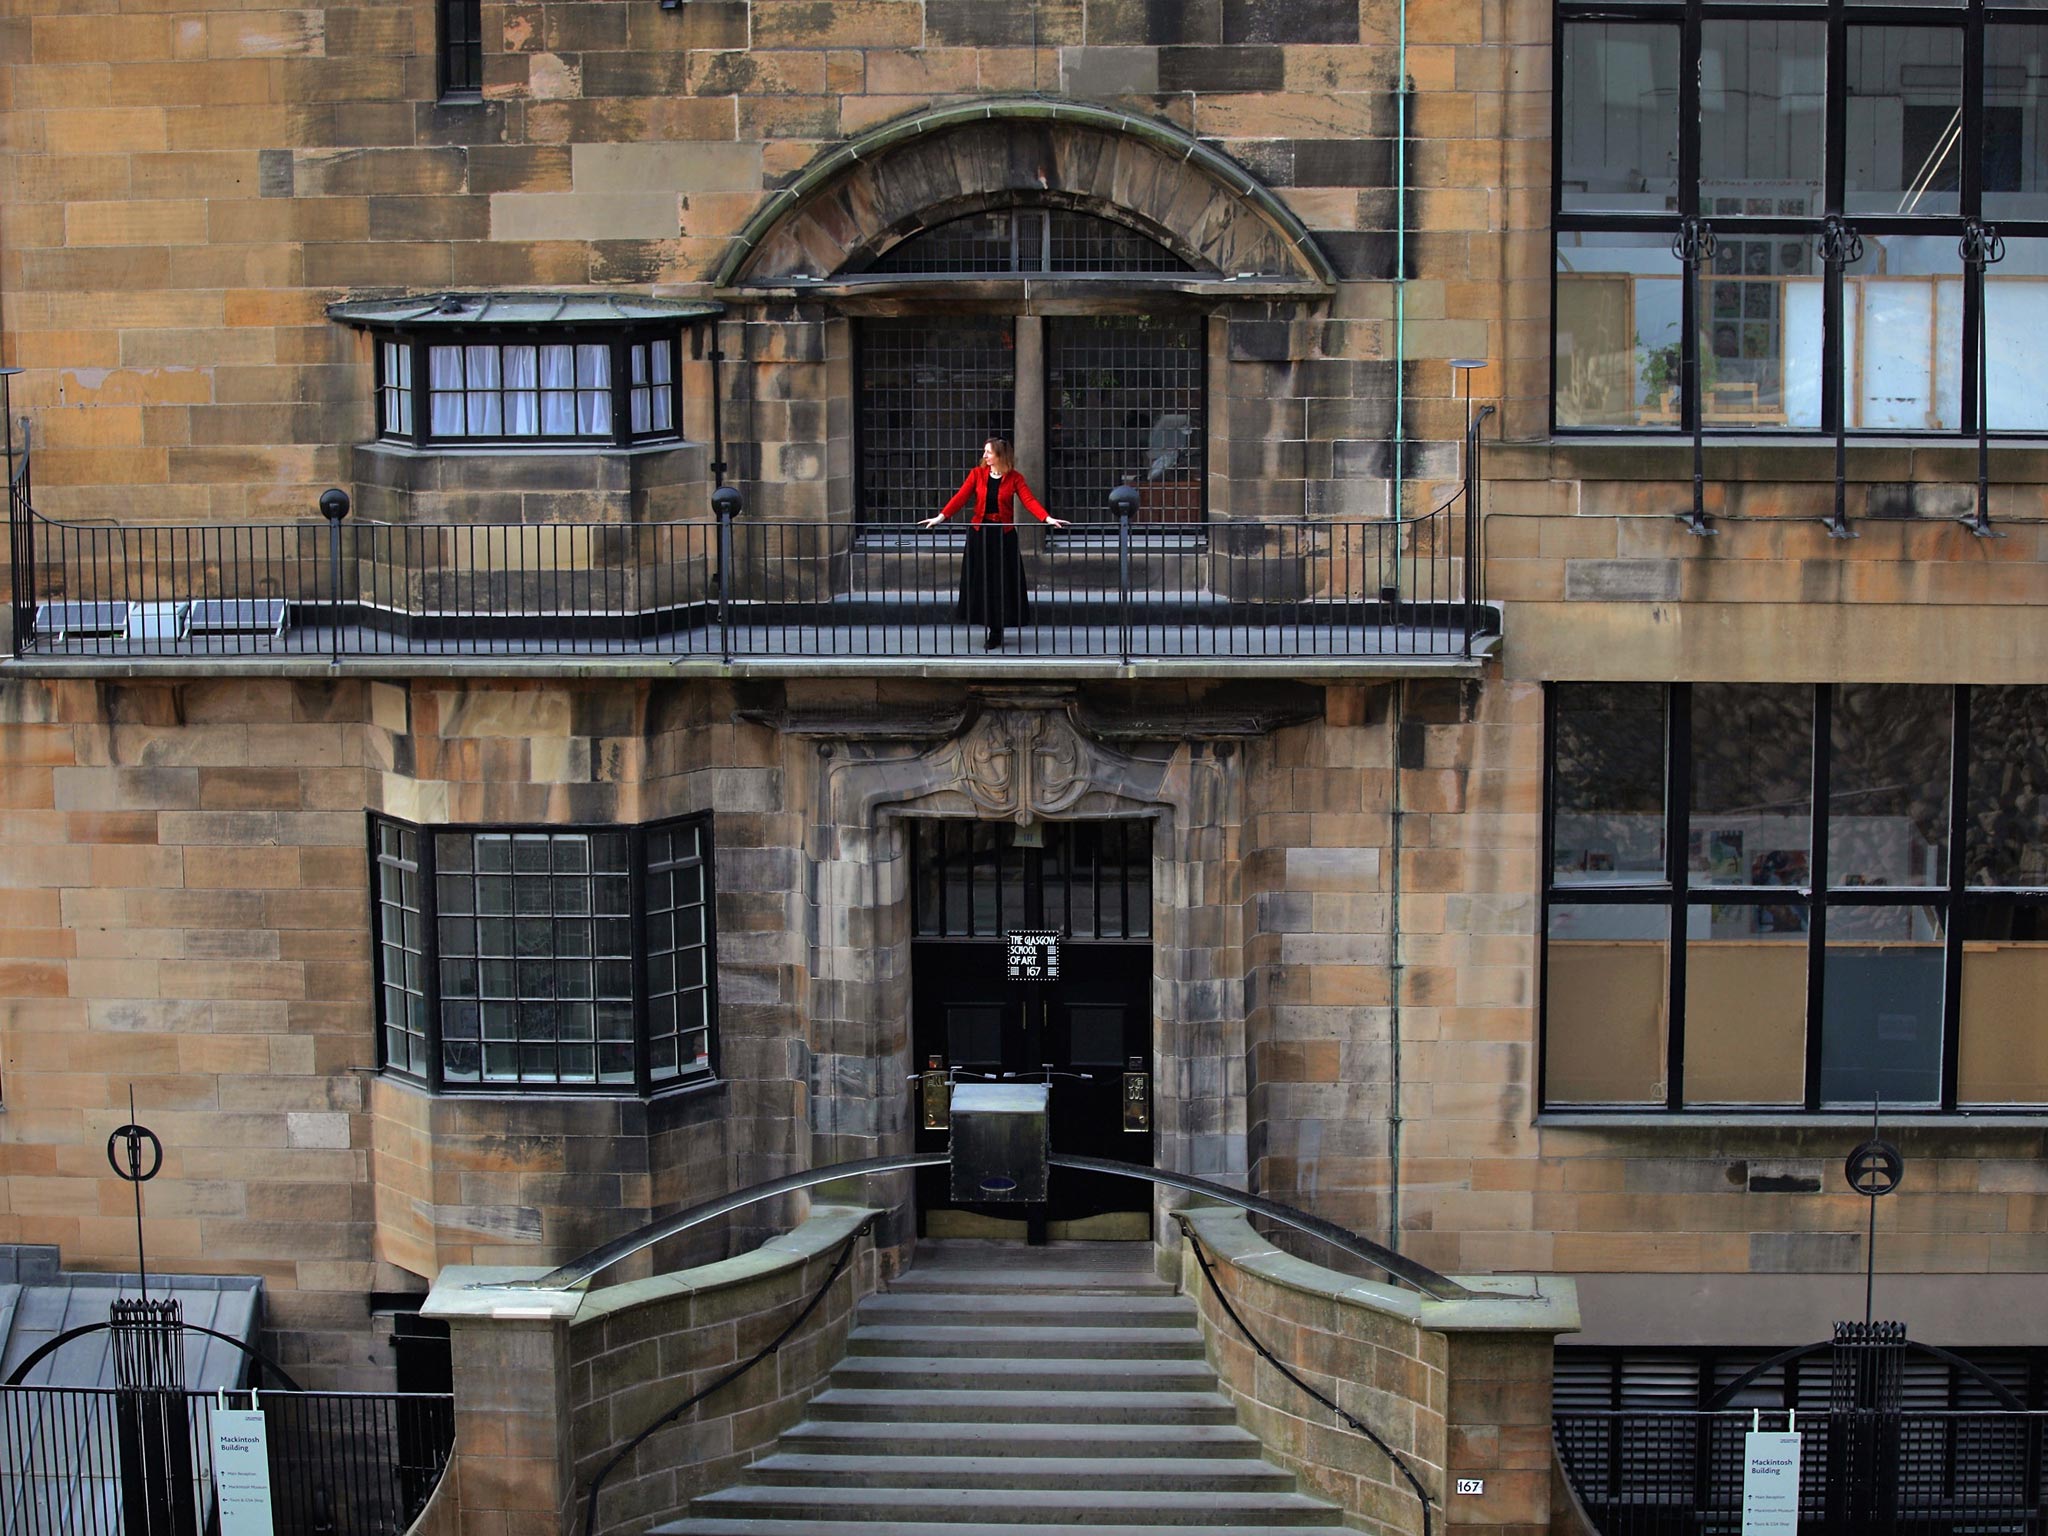 The Glasgow School of Art – designed by Charles
Rennie Mackintosh